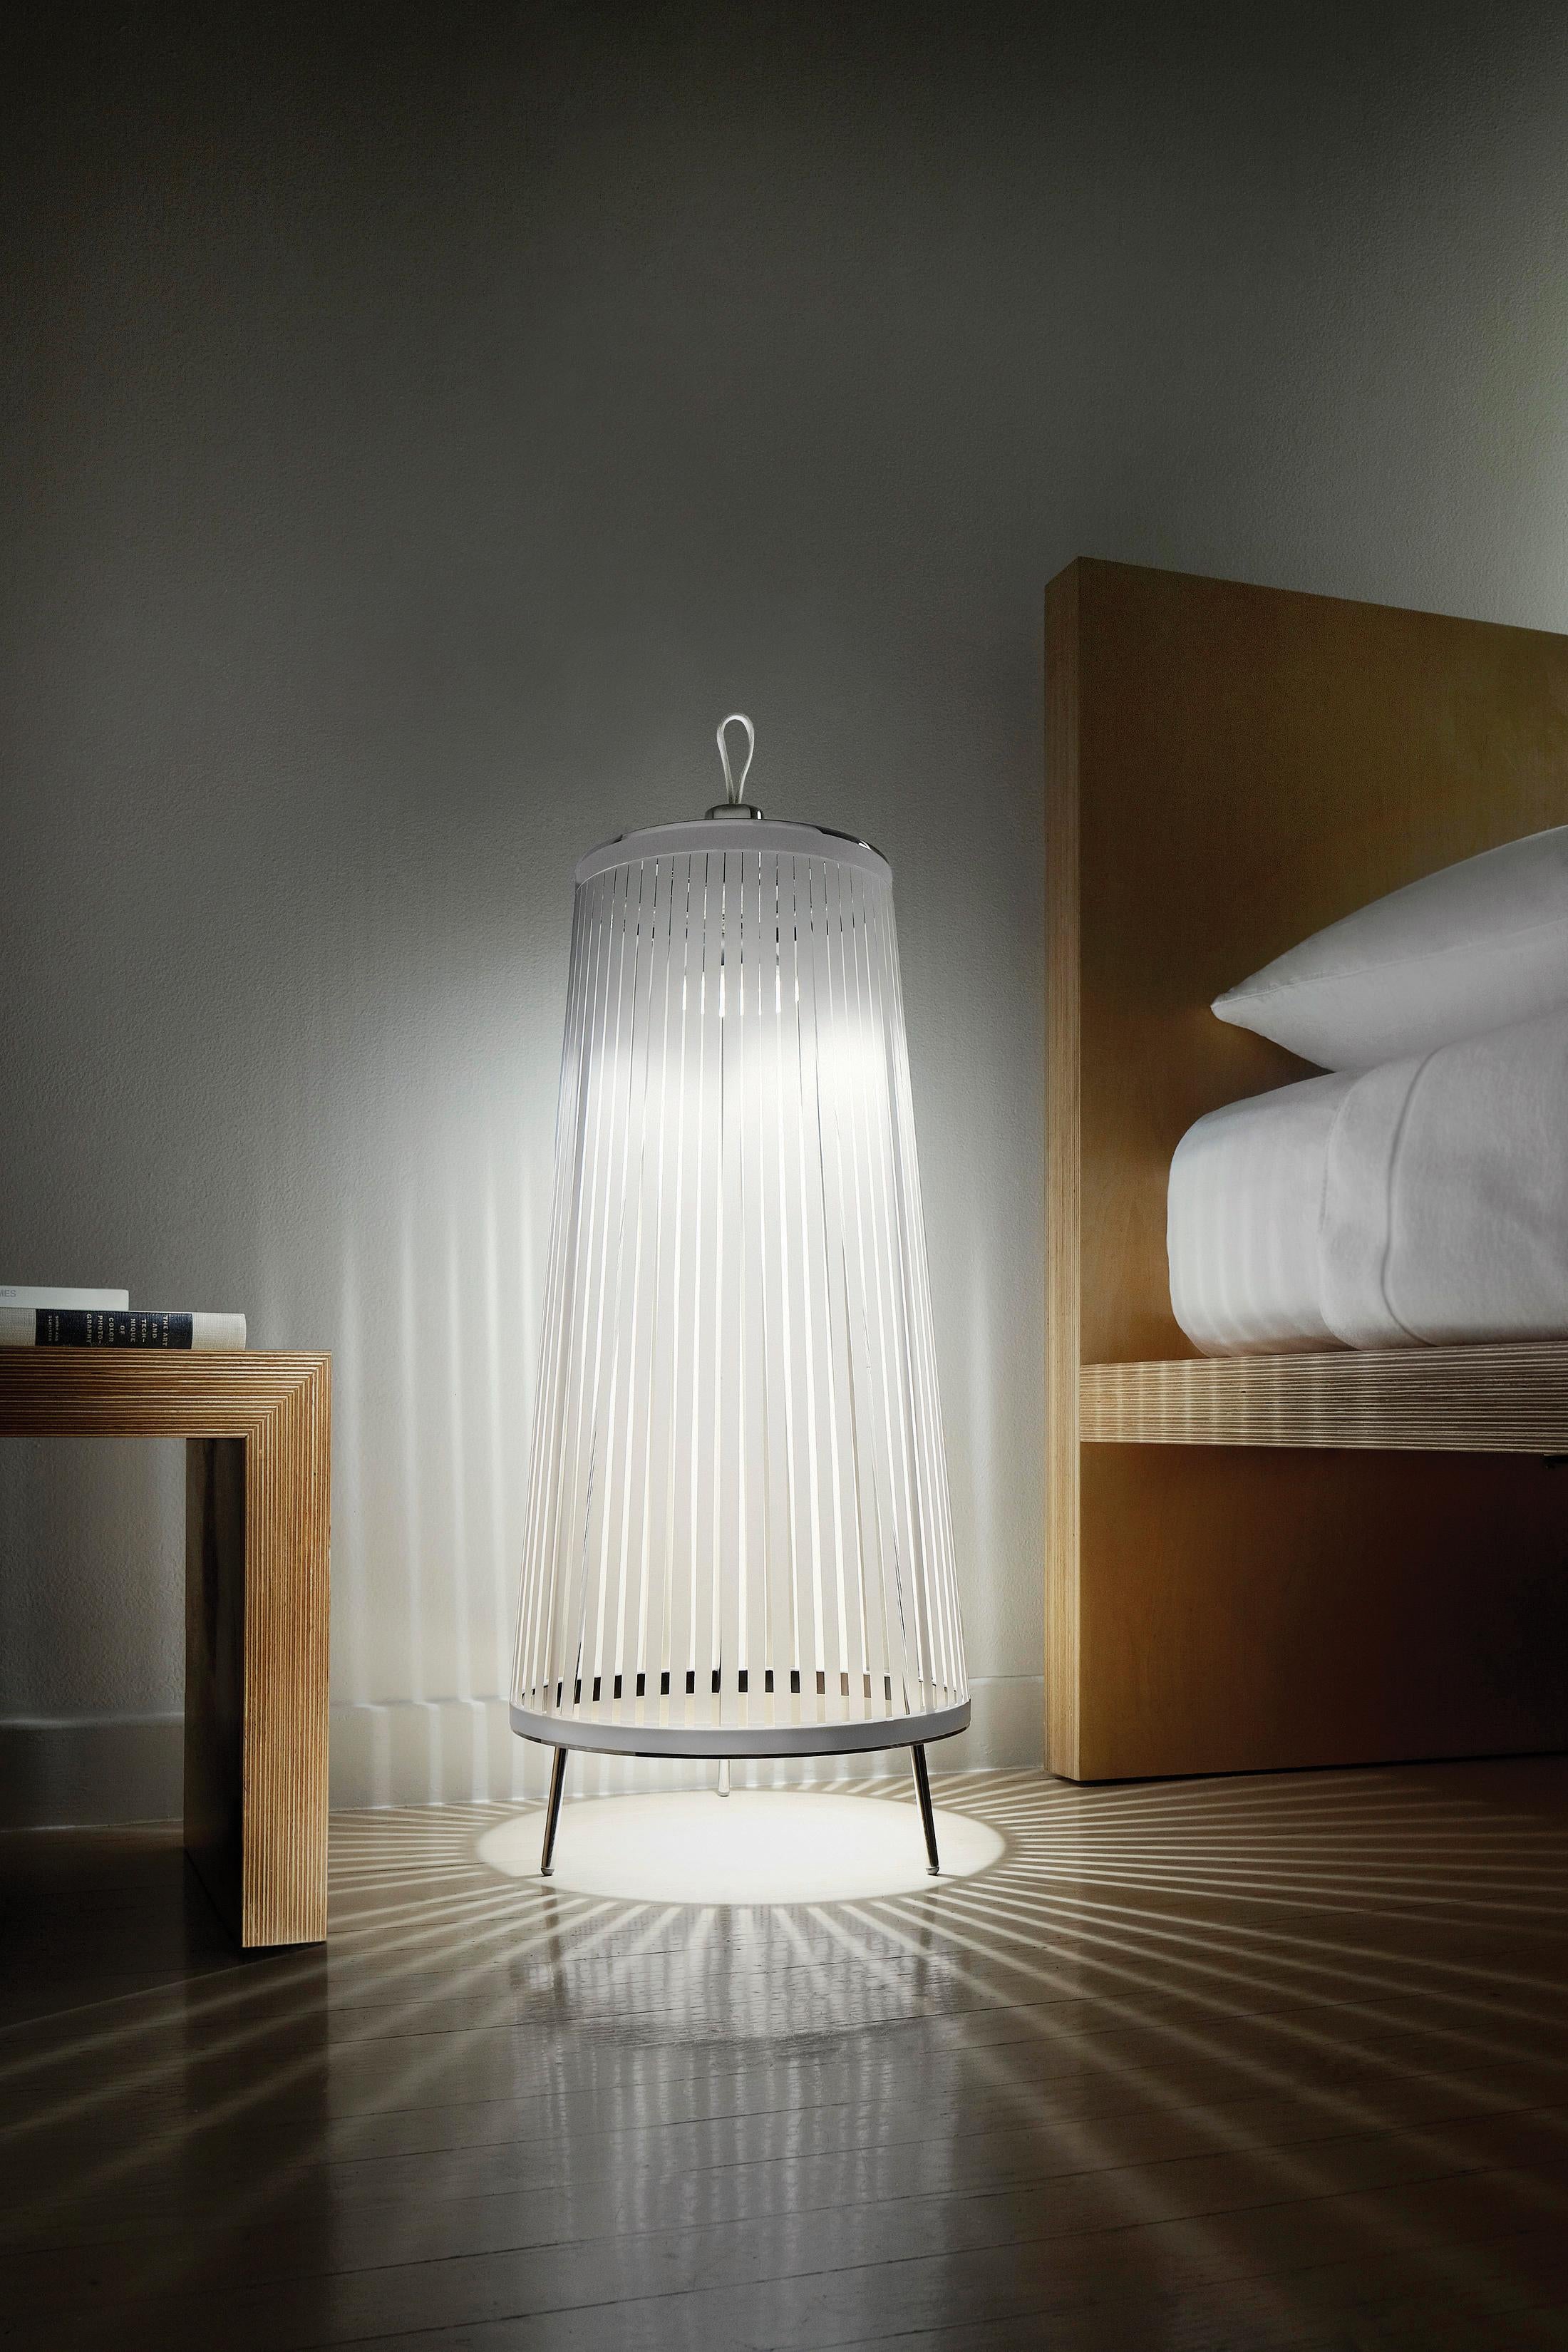 Solis 48 Freestanding Lamp in Black by Pablo Designs (amerikanisch)